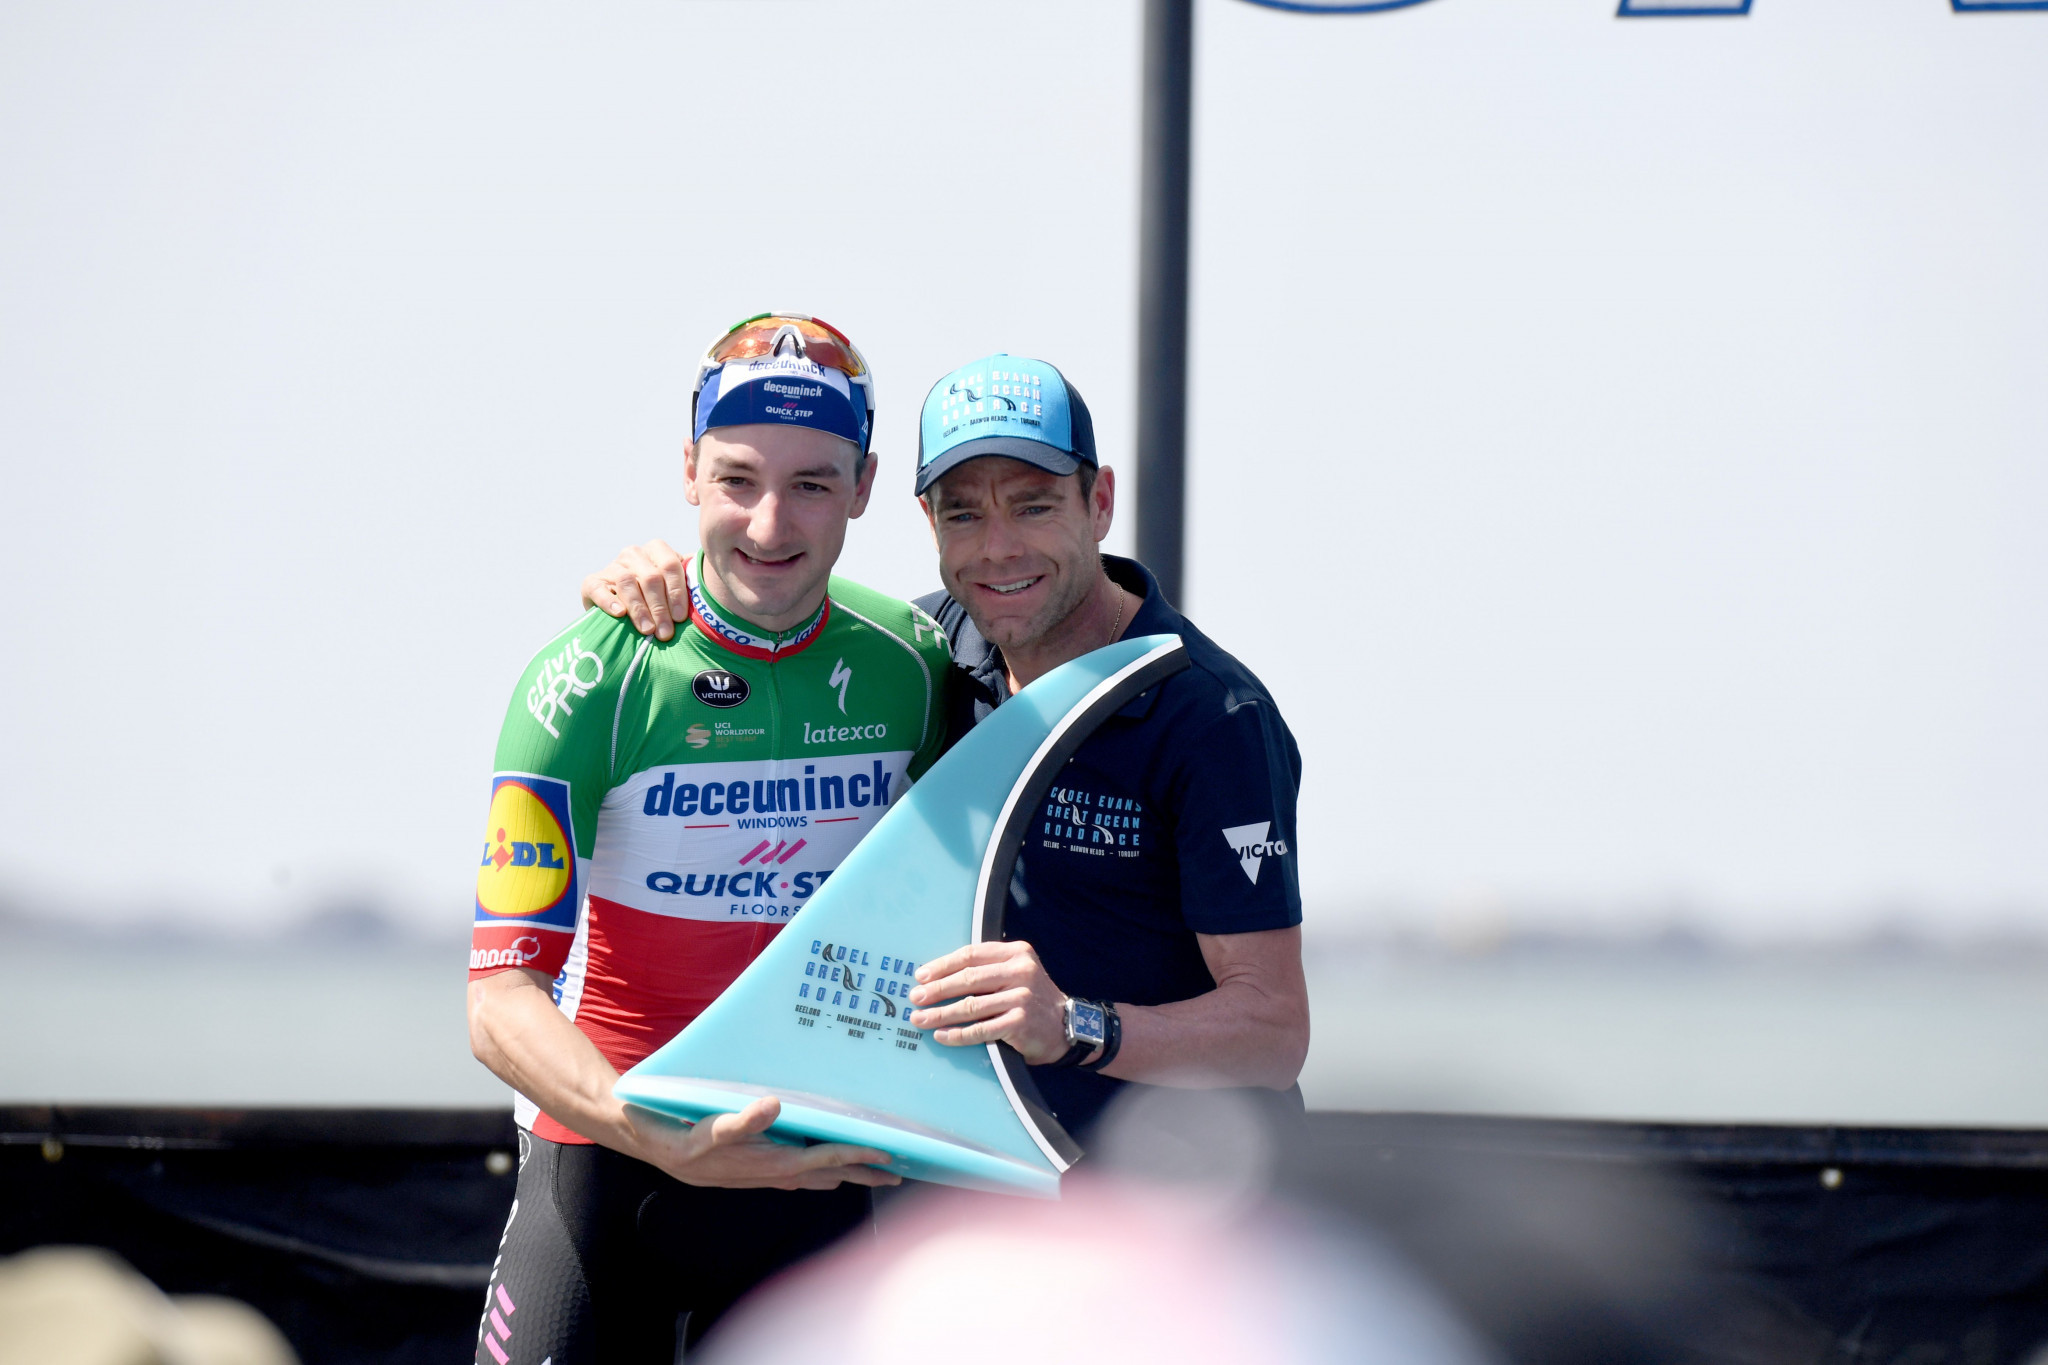 Italian rider Elia Viviani won the Cadel Evans Great Ocean Race in Geelong, with Australia's Caleb Ewan finishing second ©Getty Images